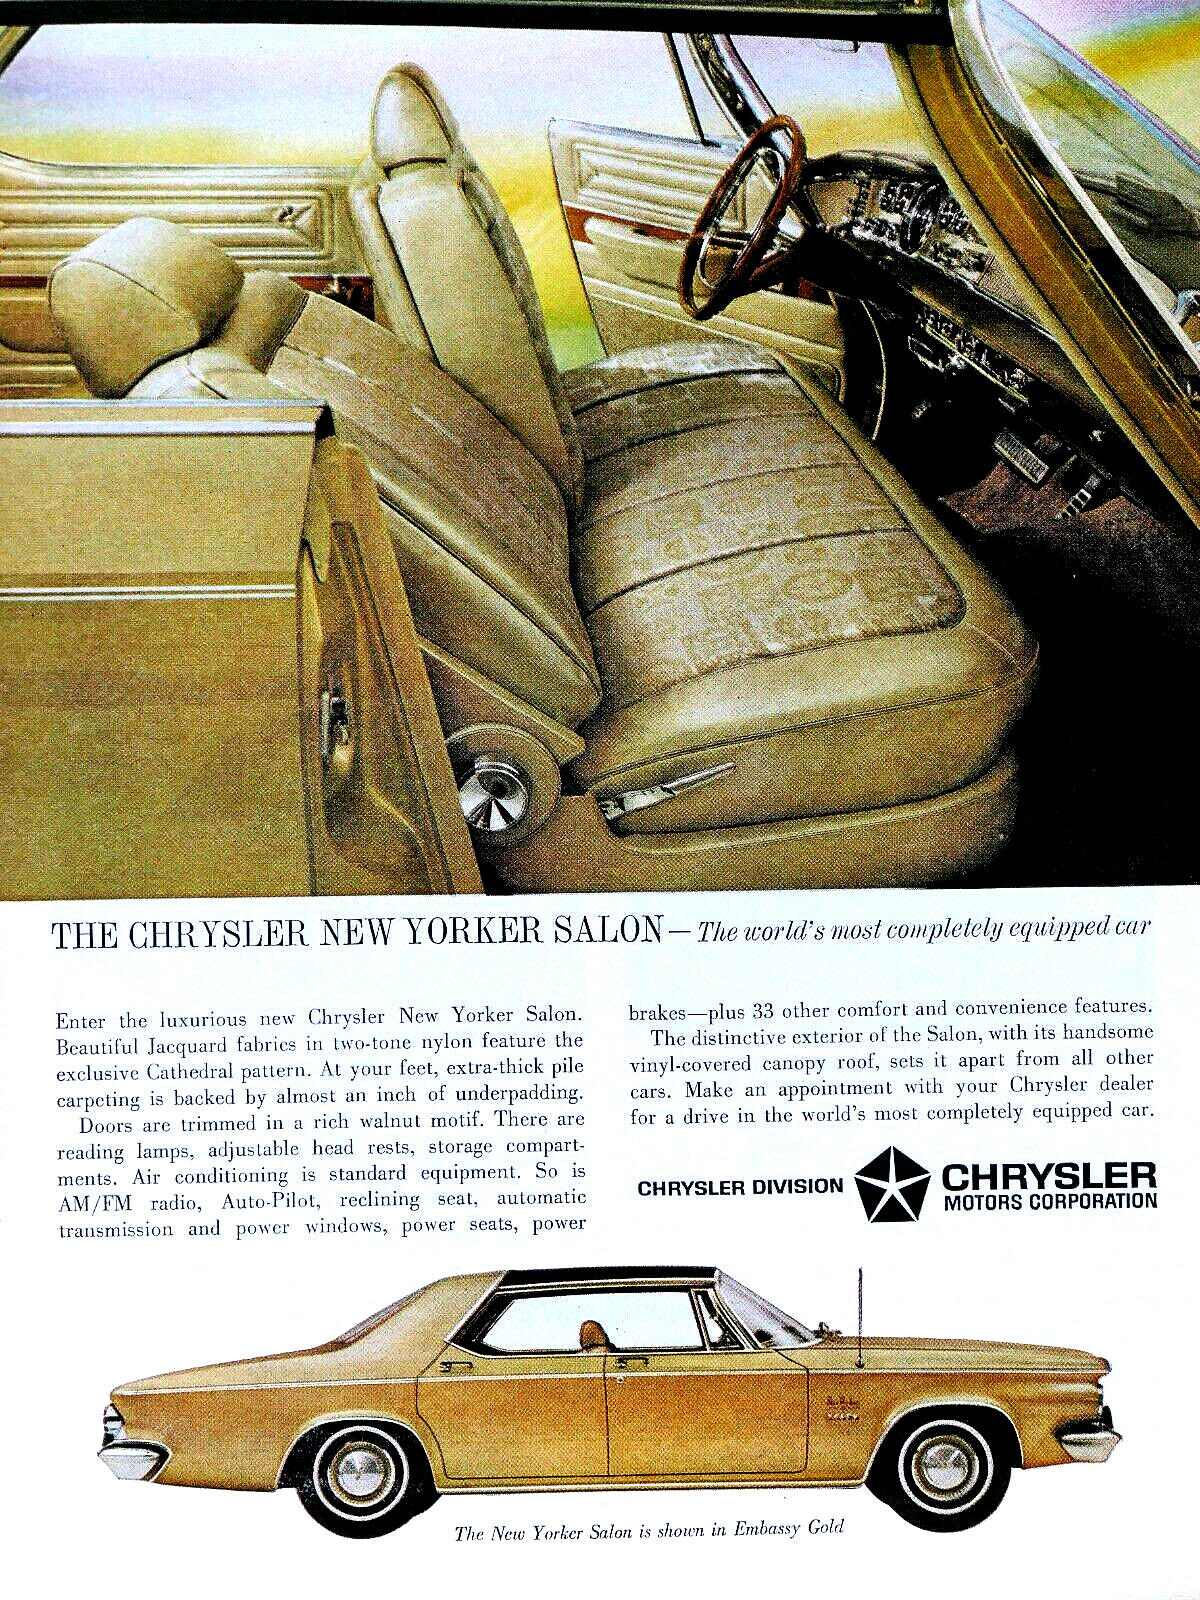 1963 Chrysler New Yorker Salon Vintage Embassy Gold Original Print Ad 8.5 x 11\